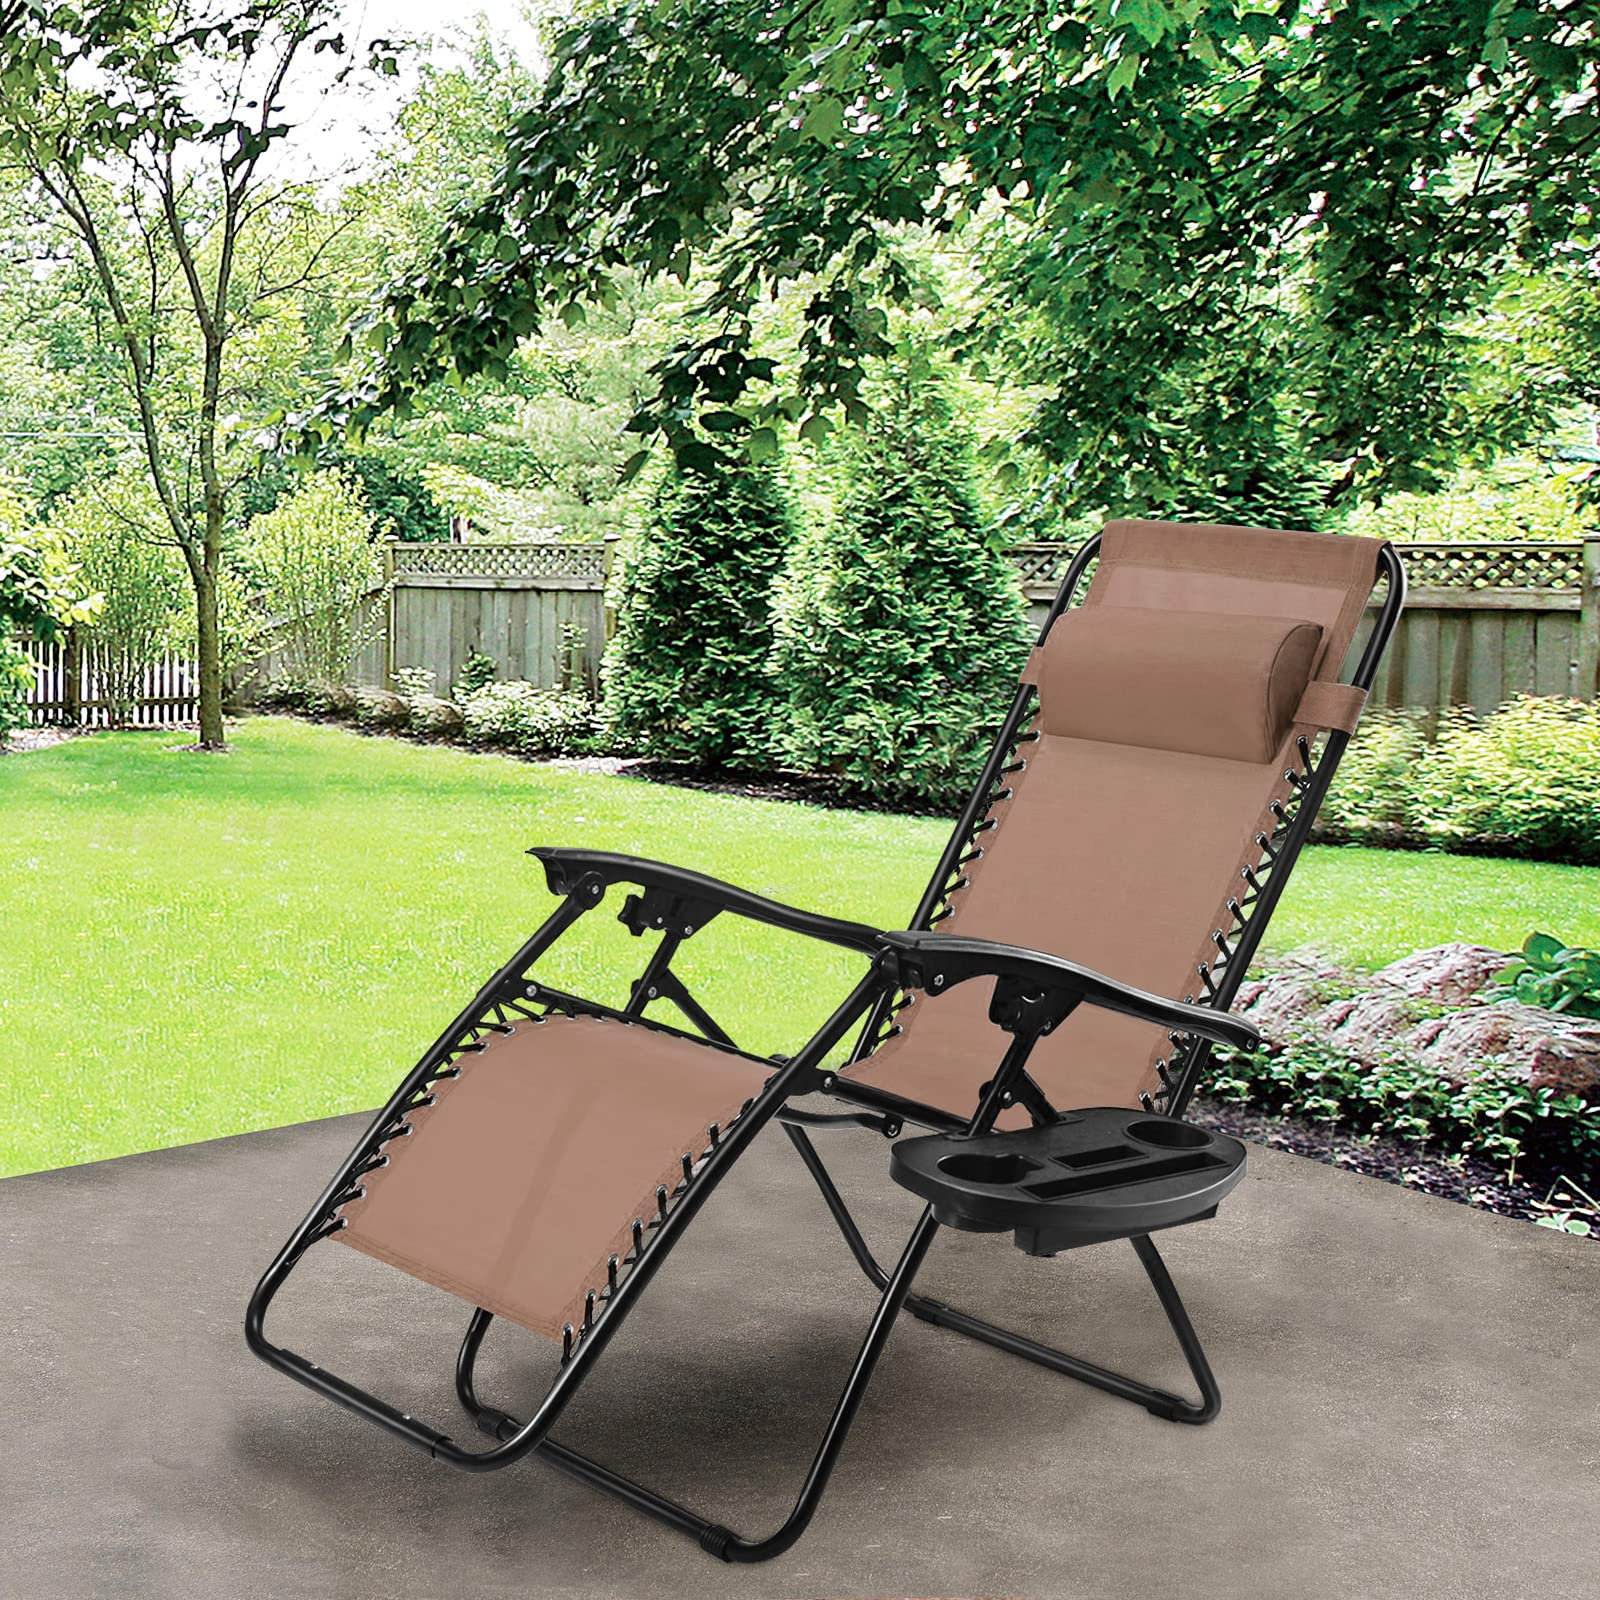 2x Folding Recline Zero Gravity Chairs Garden Lounge Beach Camp Portable W/Trays 